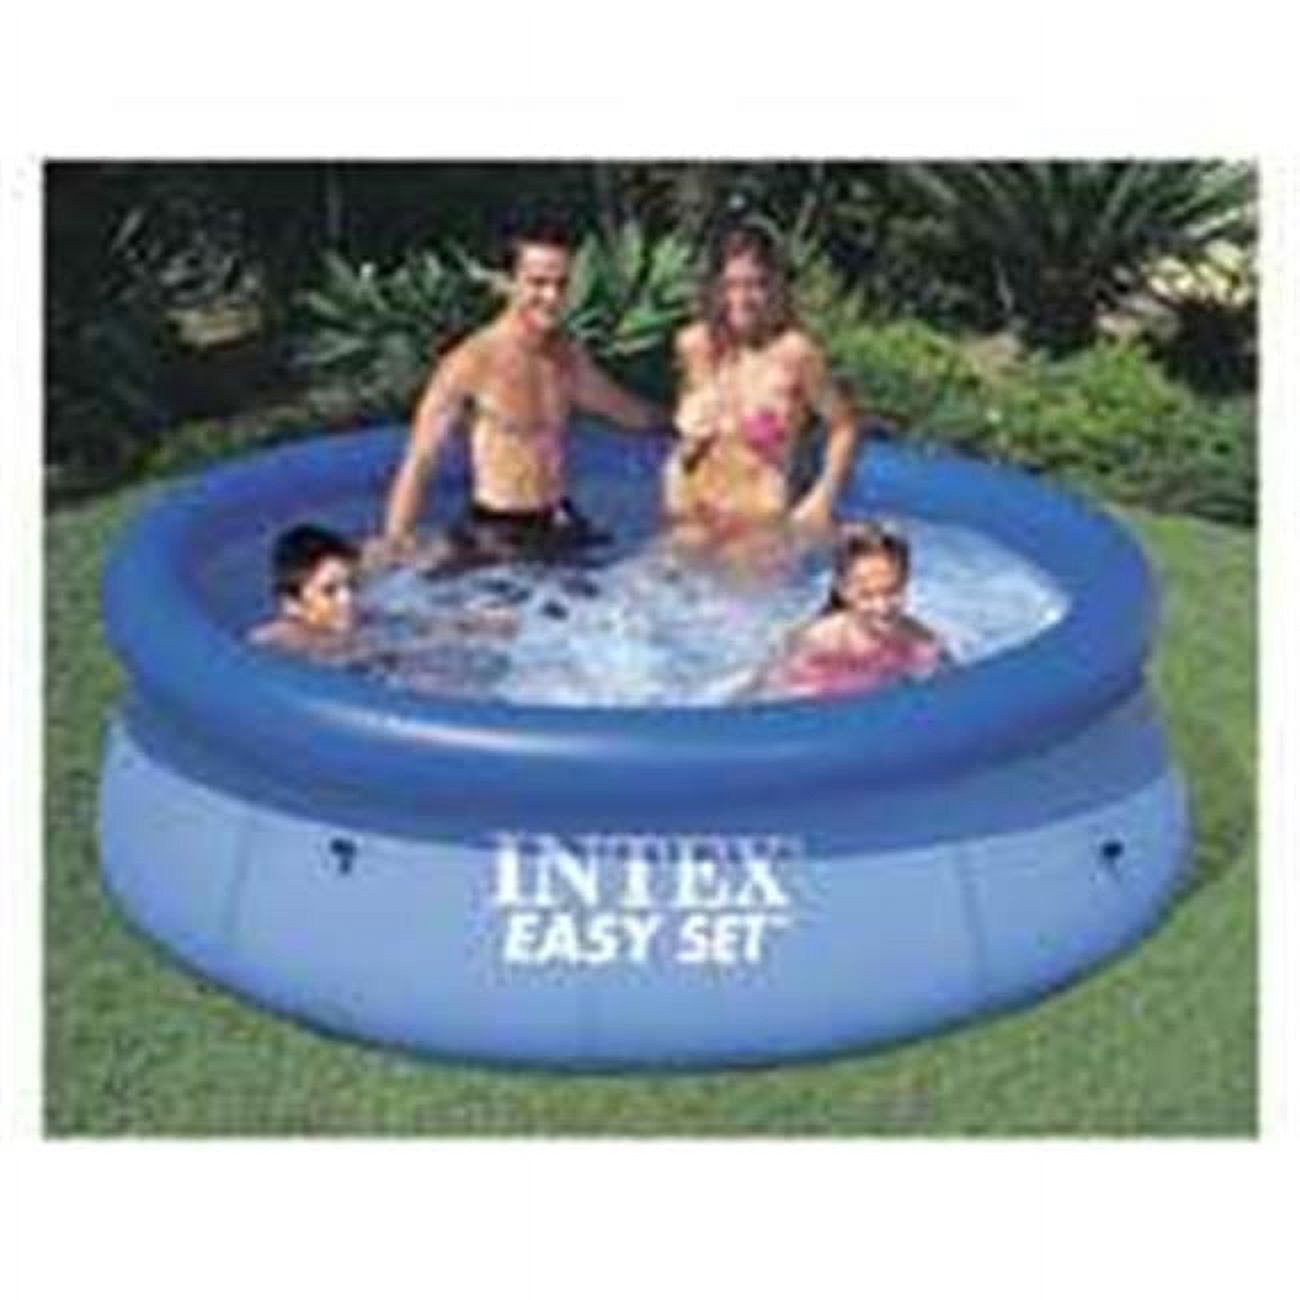 Intex Swimming Pool- Easy Set, 8ft.x30in. - image 1 of 5